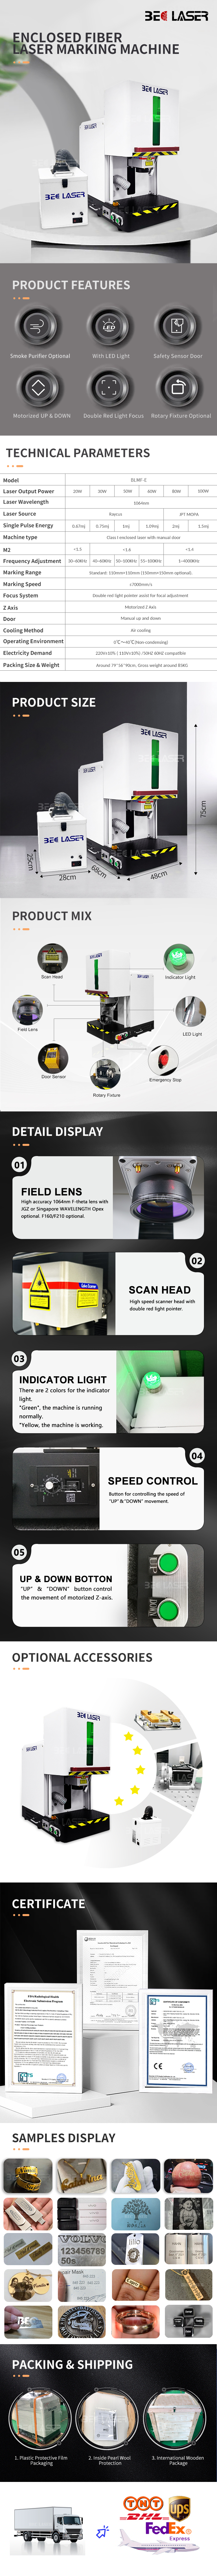 Enclosed-Fiber-Laser-Marking-Machine